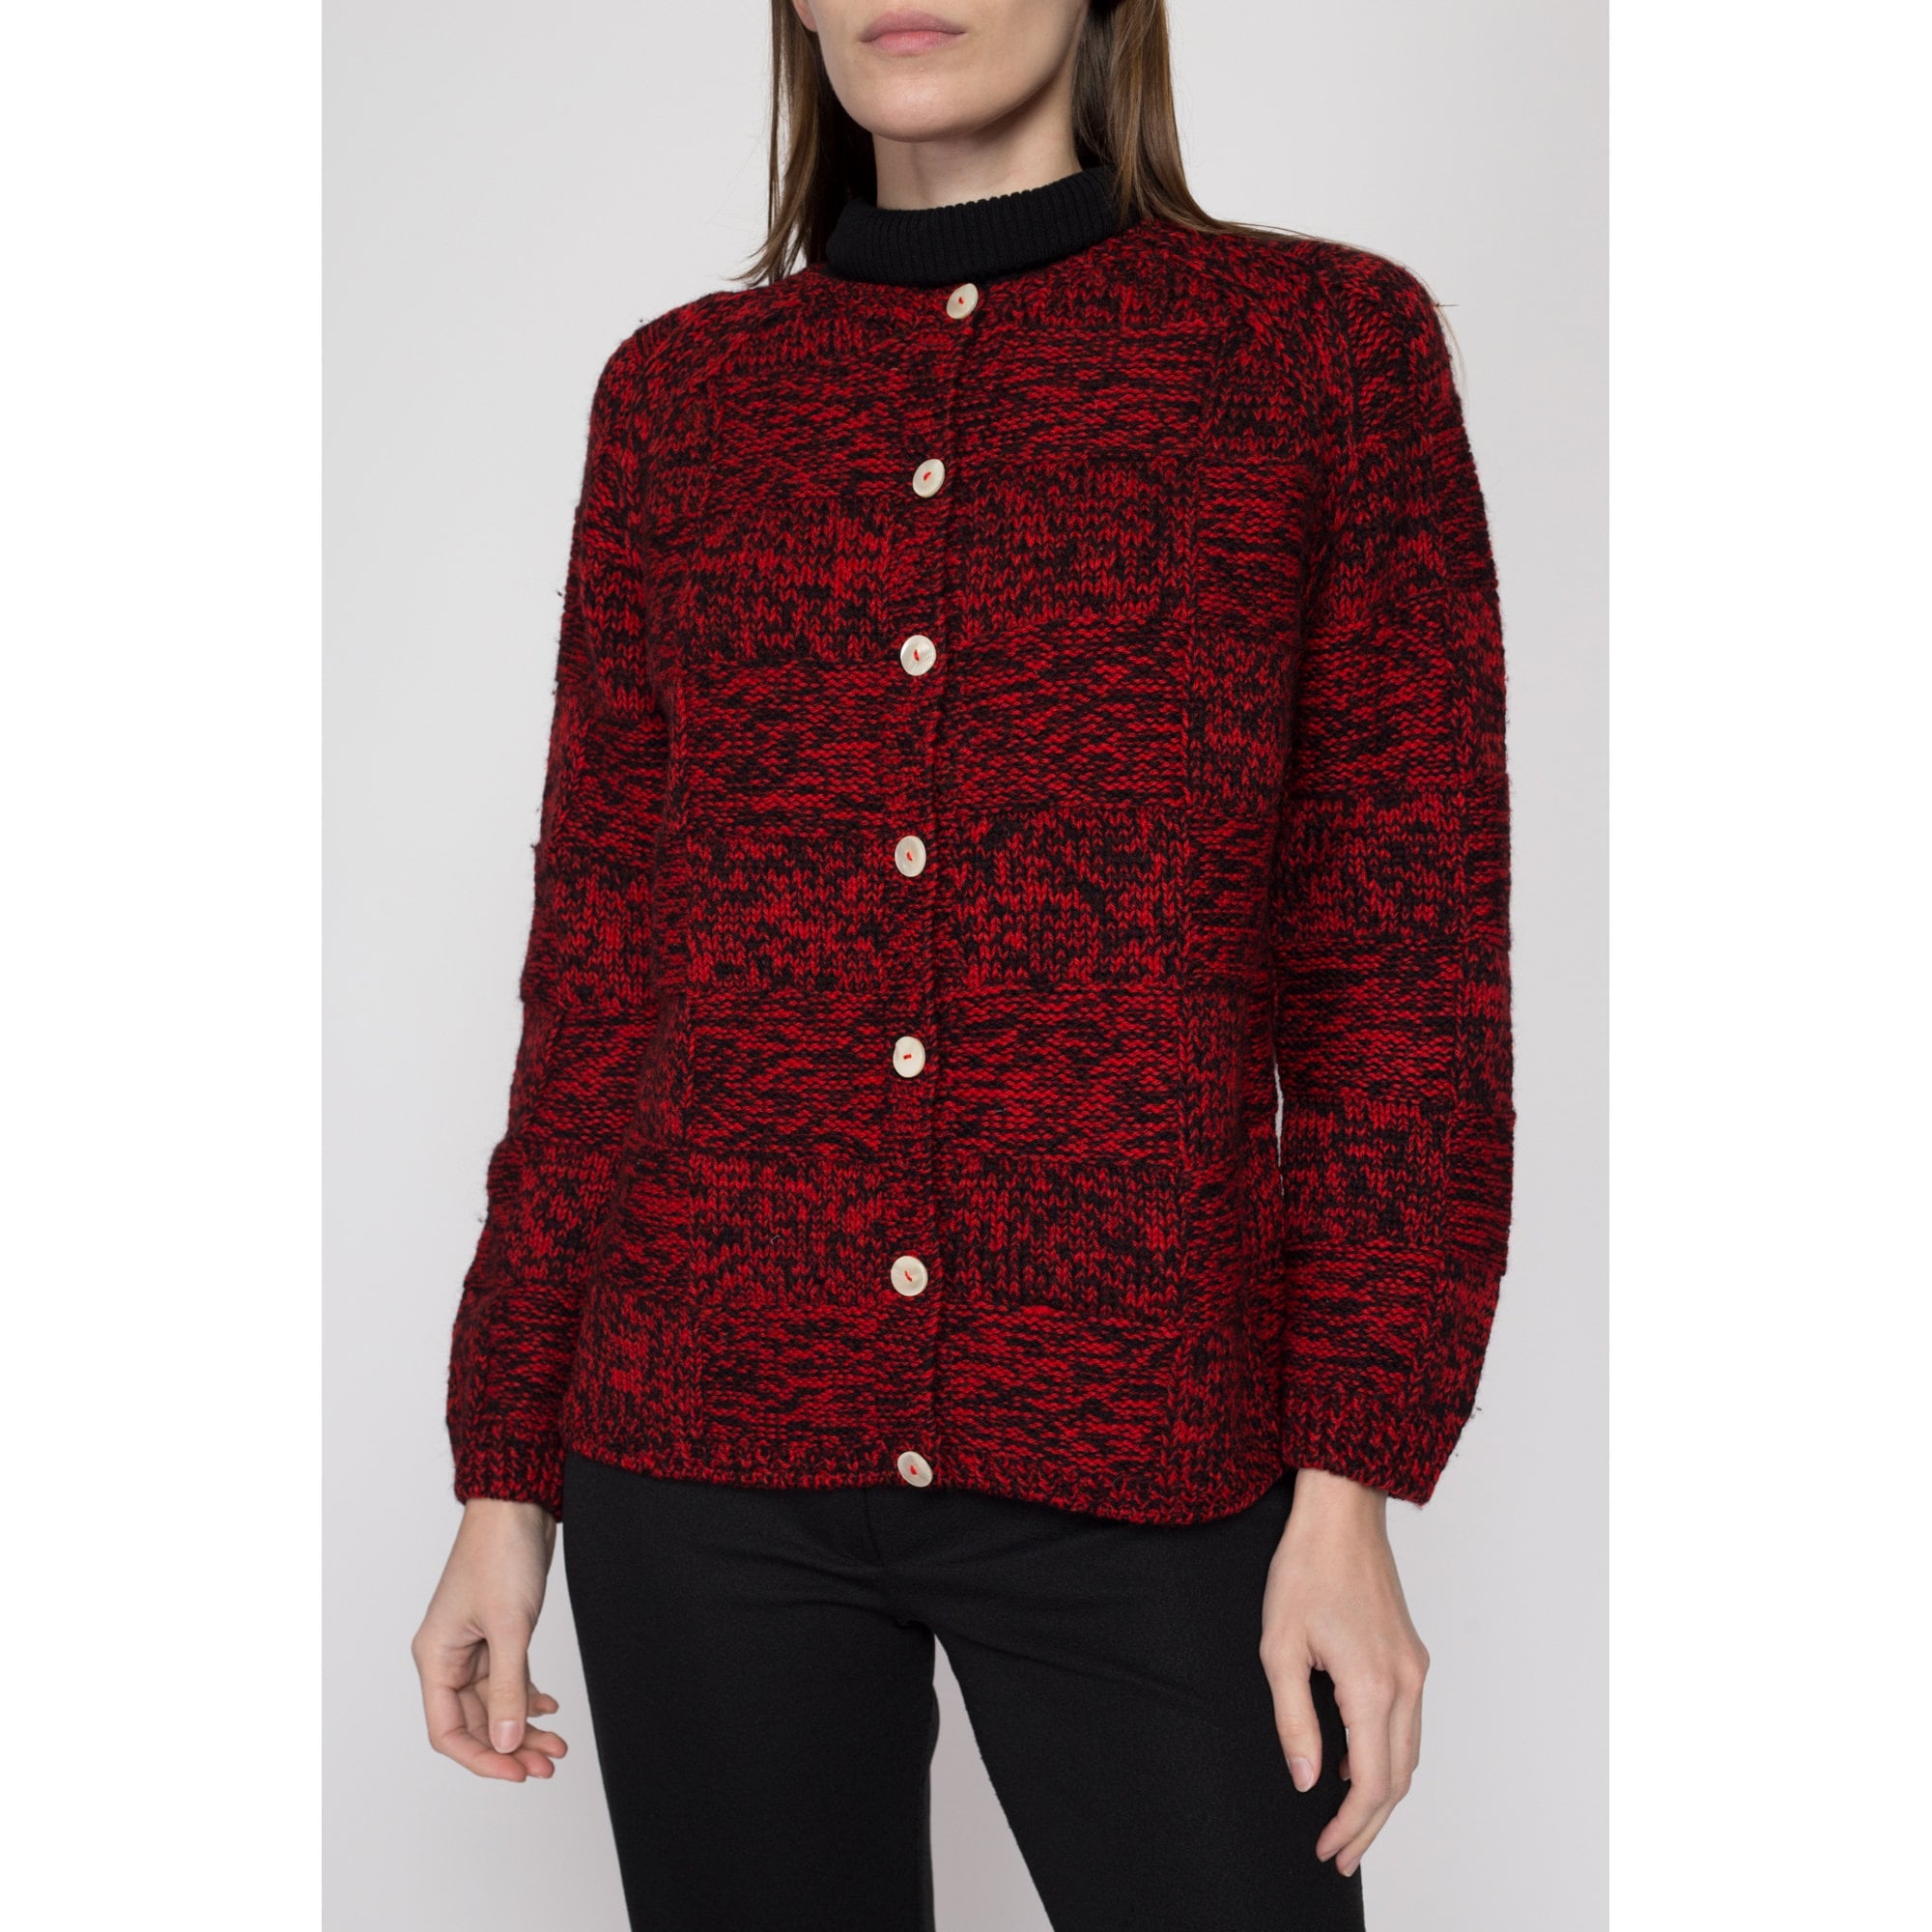 Medium 60s Saks Fifth Avenue Red & Black Marled Wool Cardigan